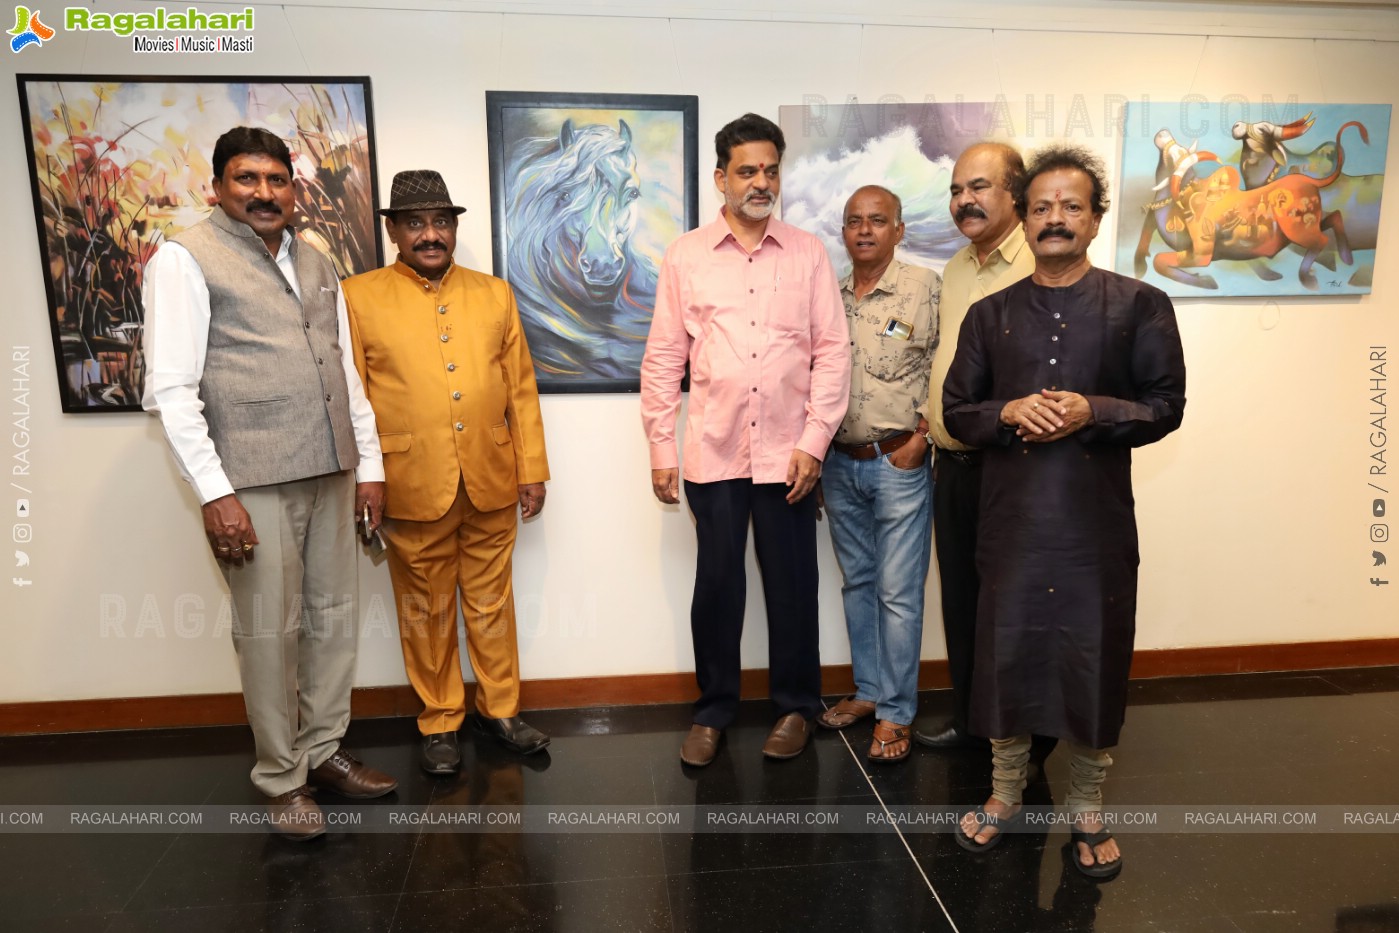 Shobha's Creations Art Exhibition, Paintings by Shobha Singh